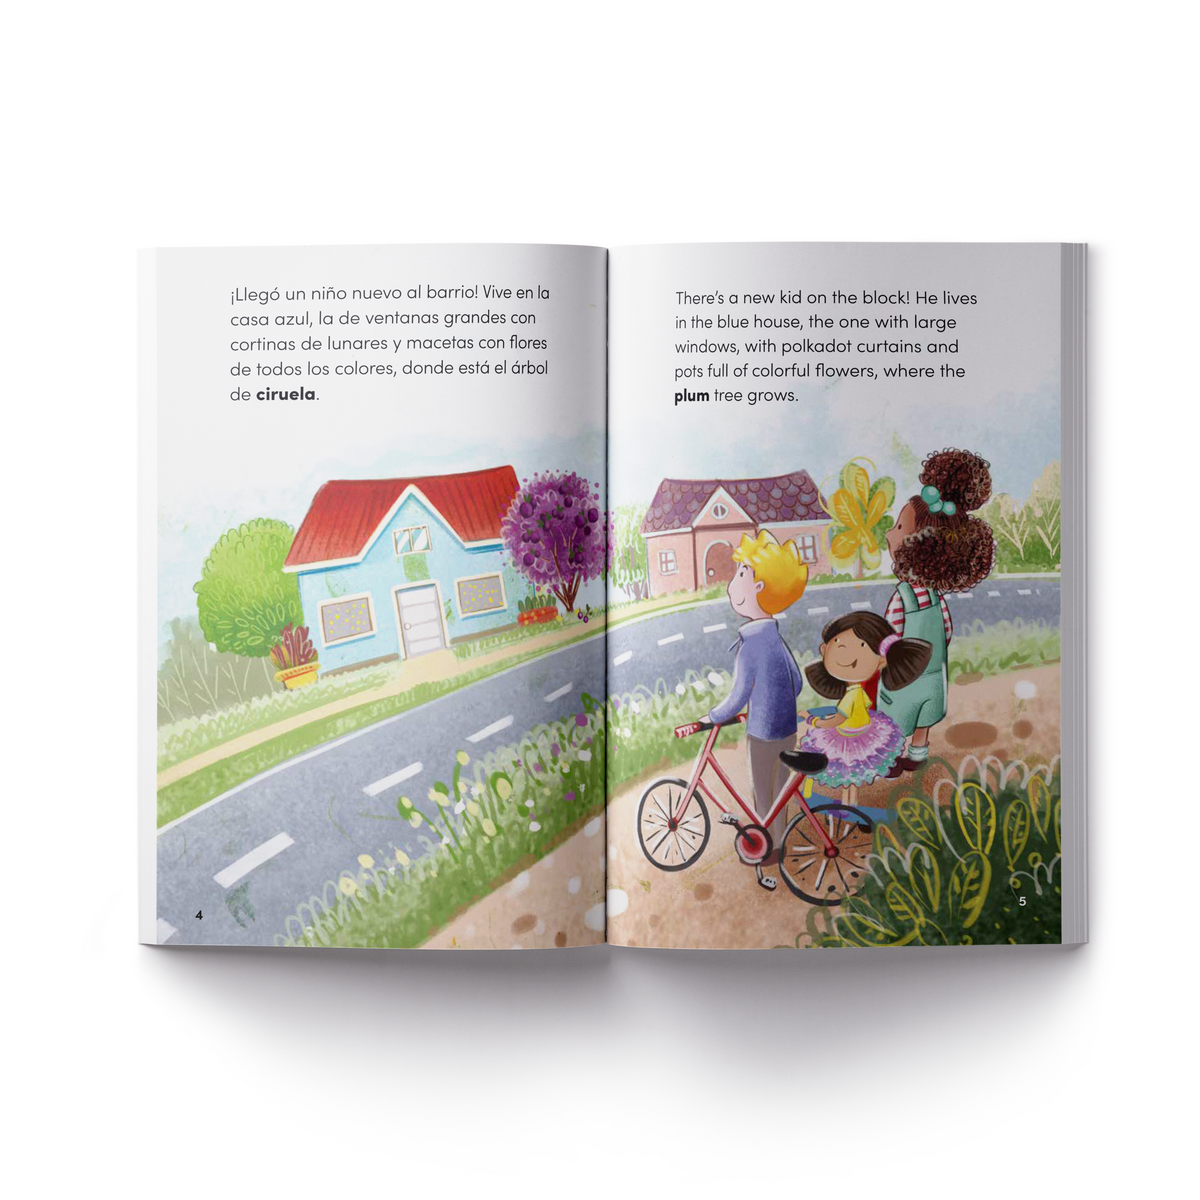 Friends on the Block "Los amigos de la cuadra" - Bilingual Spanish/English Book for Kids - Feppy Box